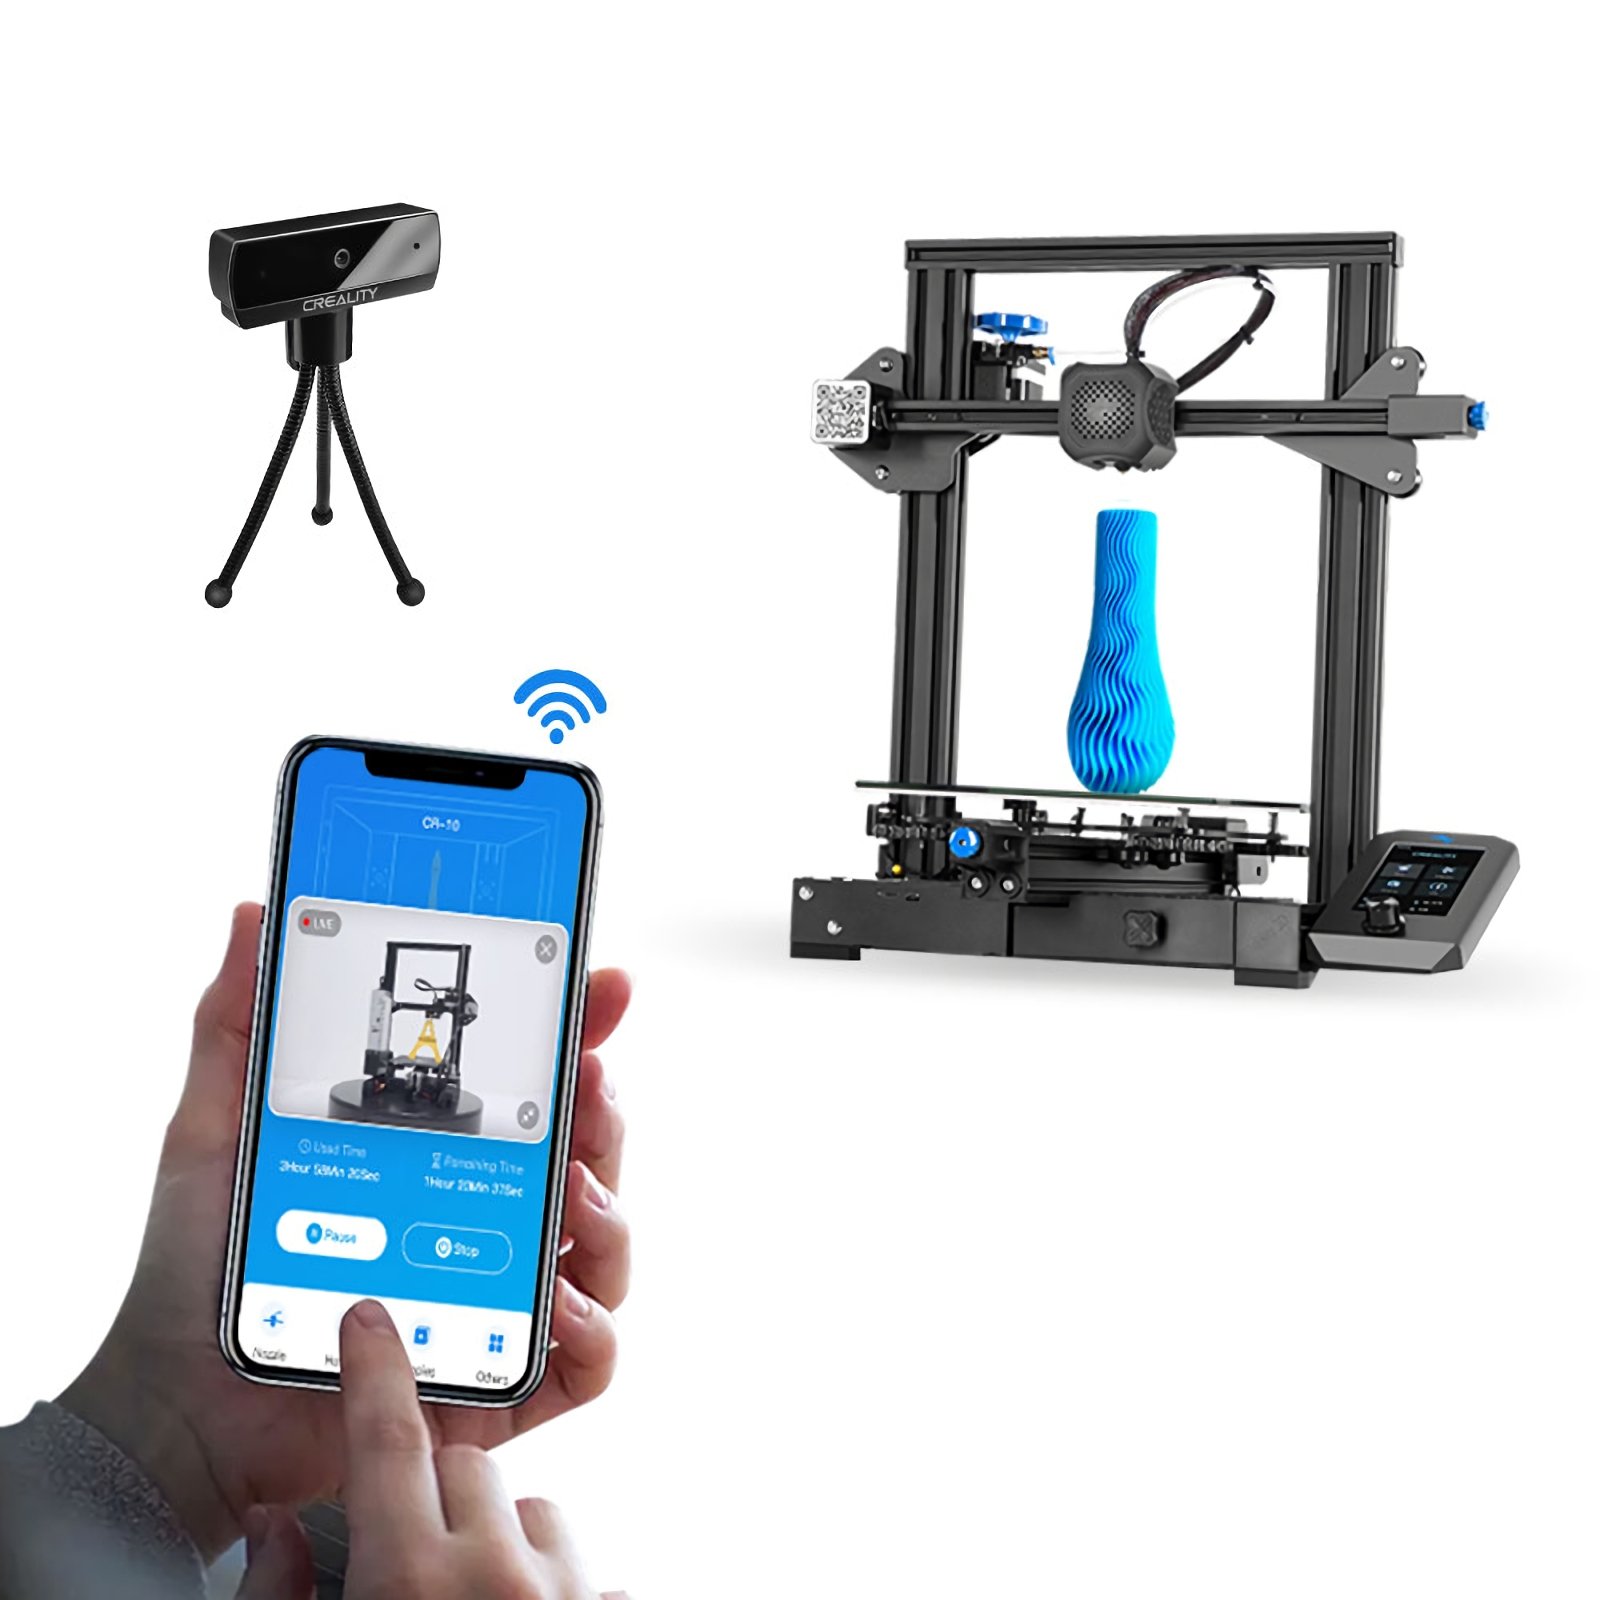 Creality Smart Kit WiFi Box & HD Camera, Wireless 3D Printing Real-time Remote Monitoring | SainSmart